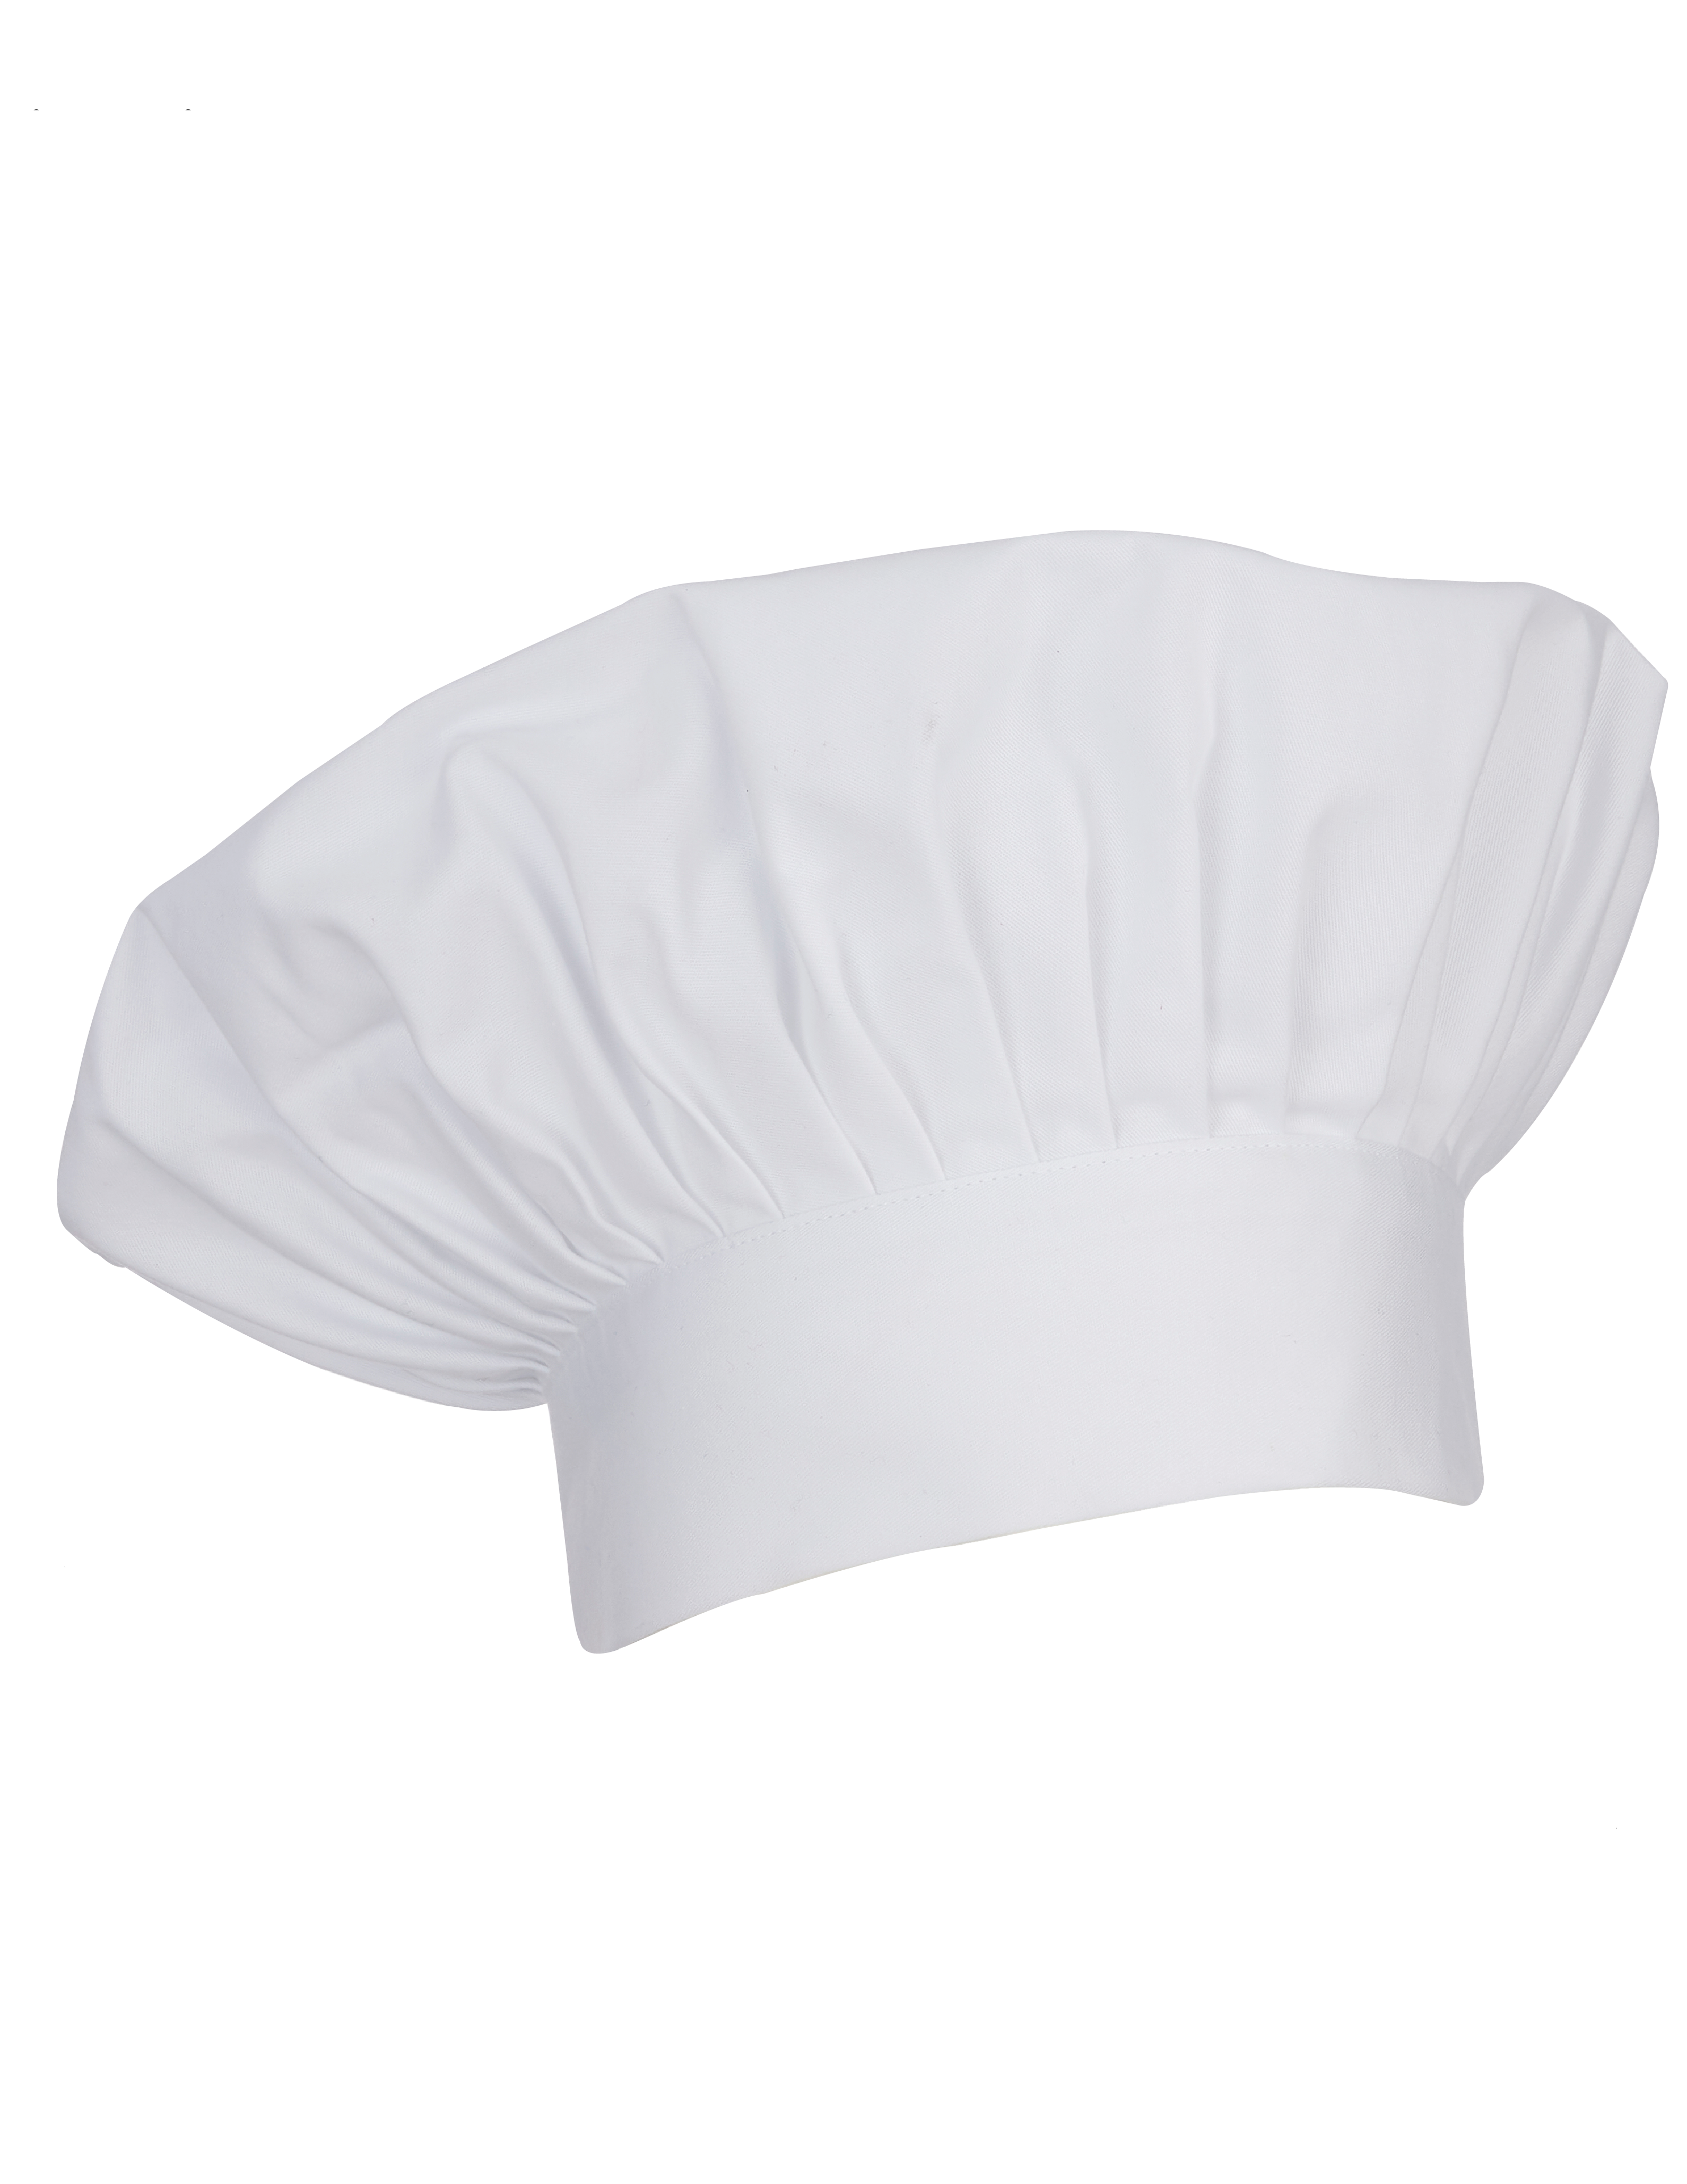 Gorro Chef blanco VALENTO - OFERTA 2X1 - Almacenes Europa 2x1